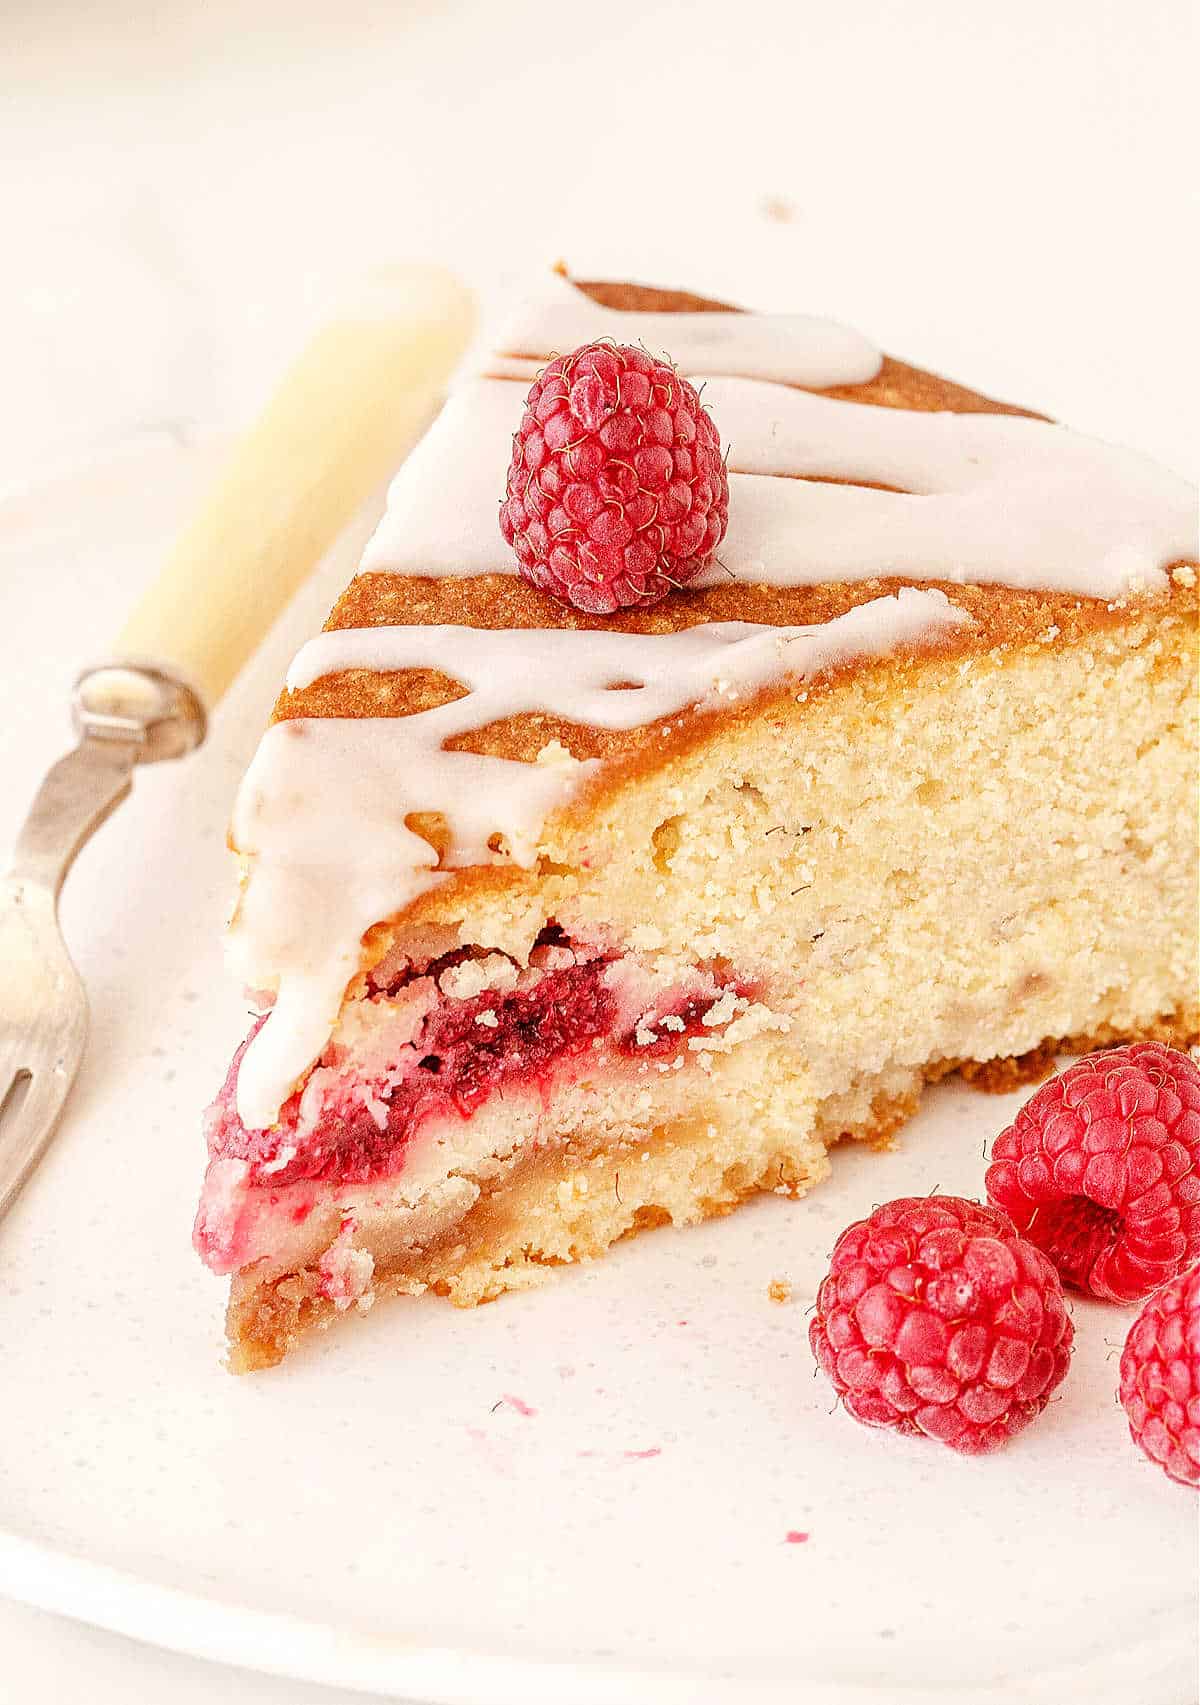 Glazed raspberry coffee cake slice on a white plate with fork. Fresh berries.